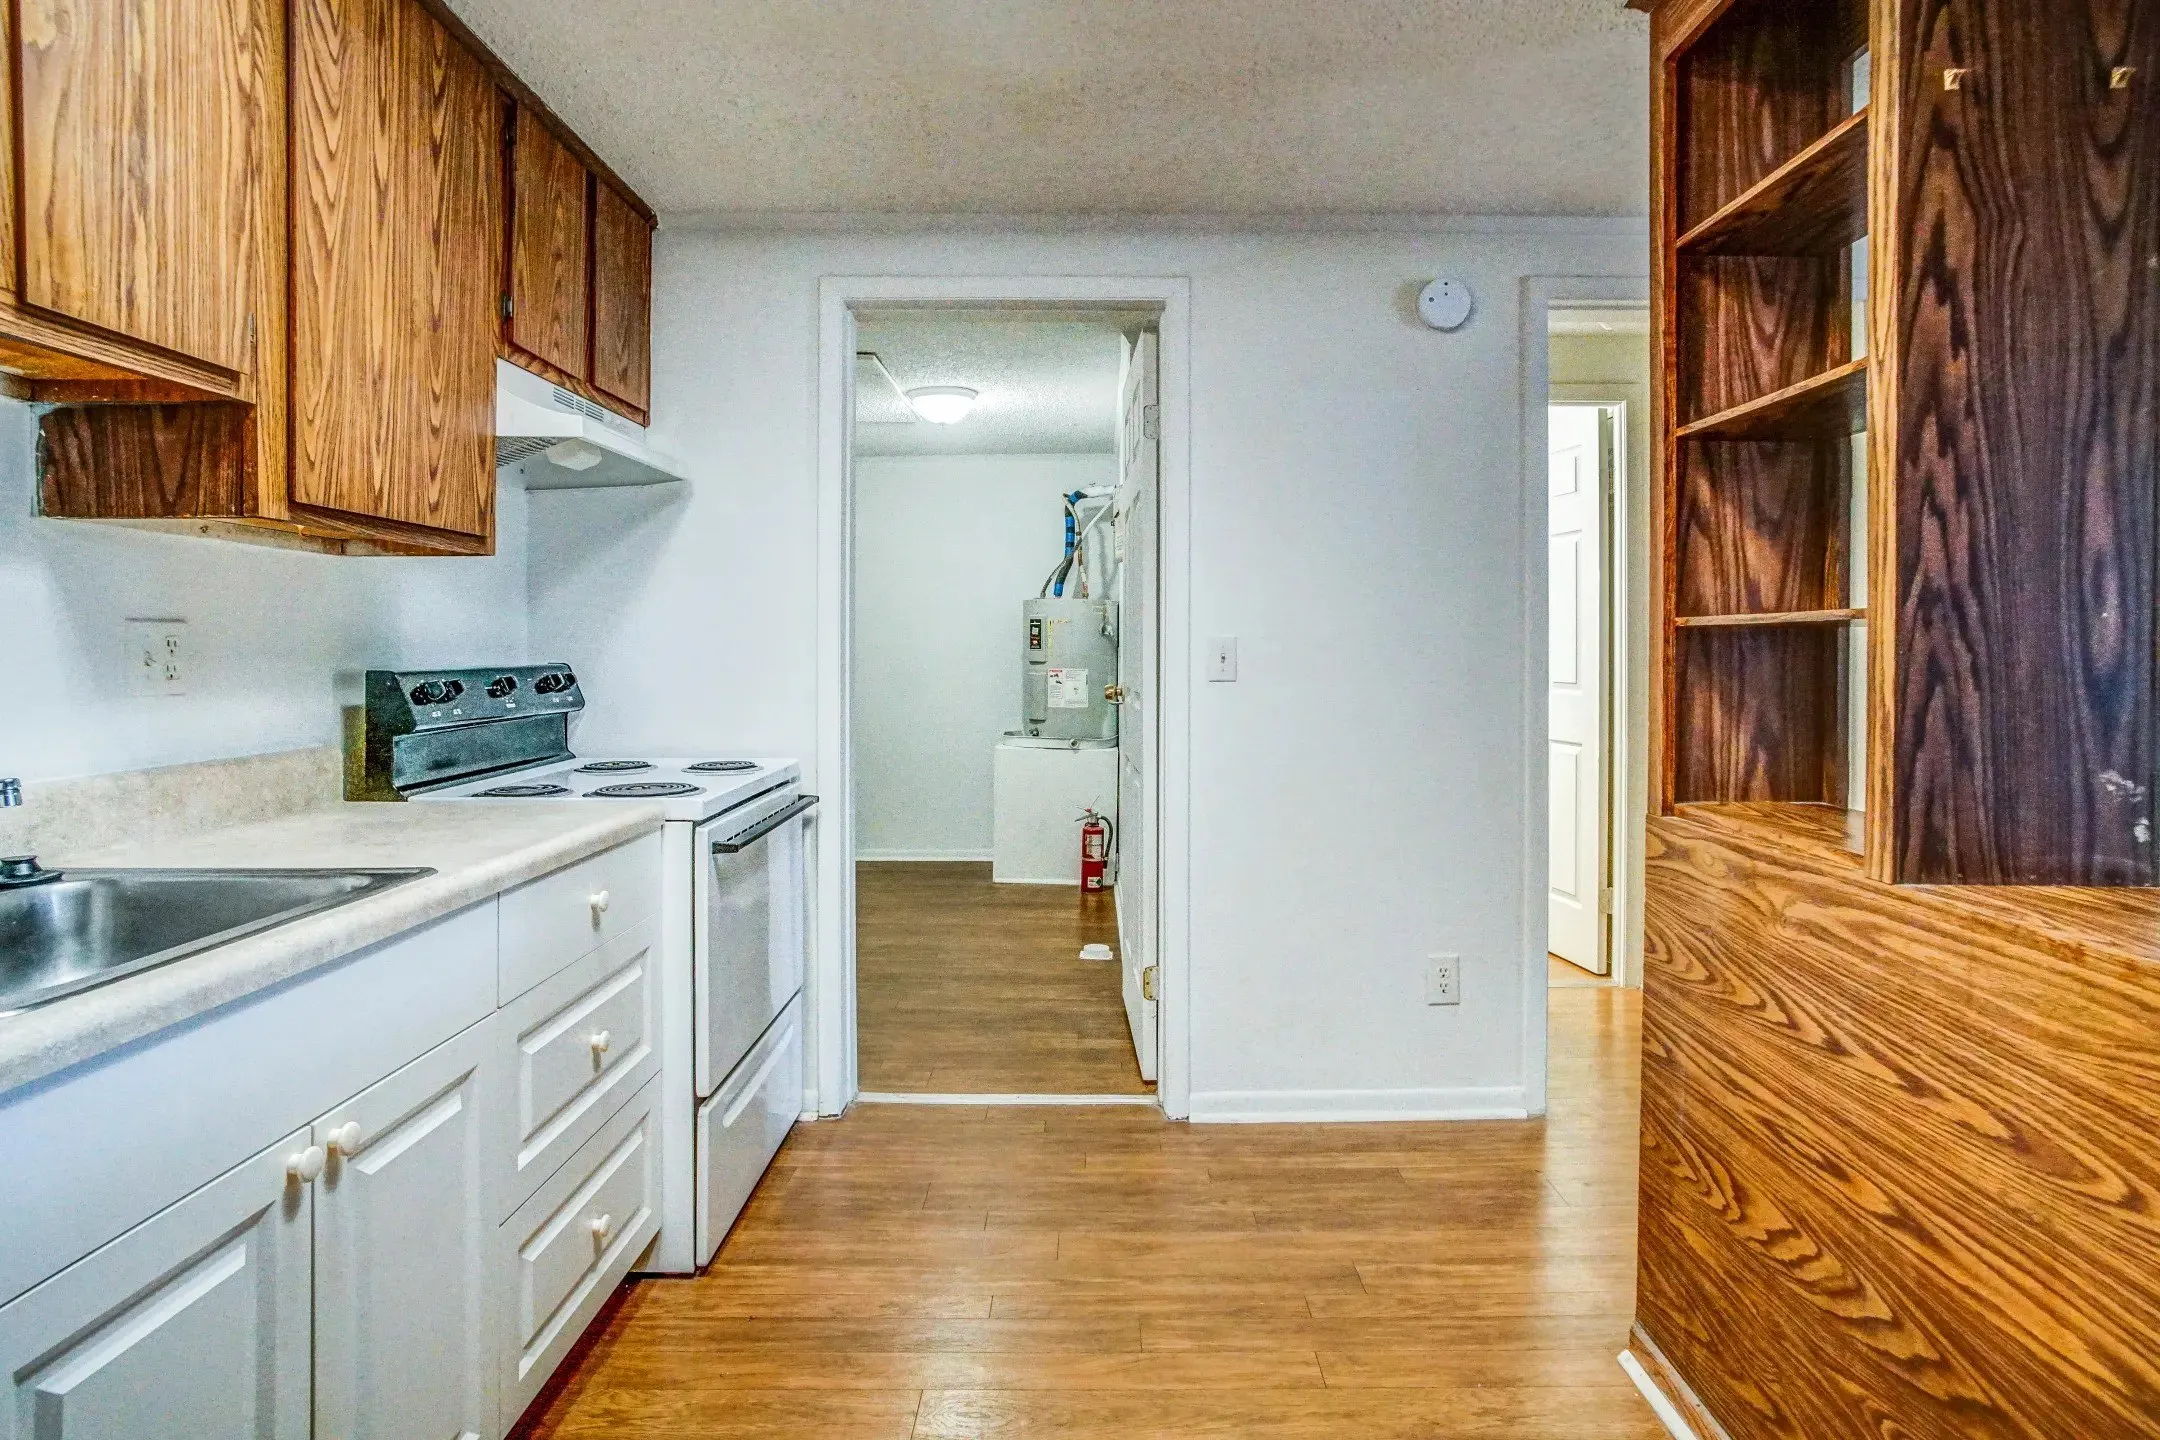 Kitchen - Curiosity Creek Apartments - Tampa, FL